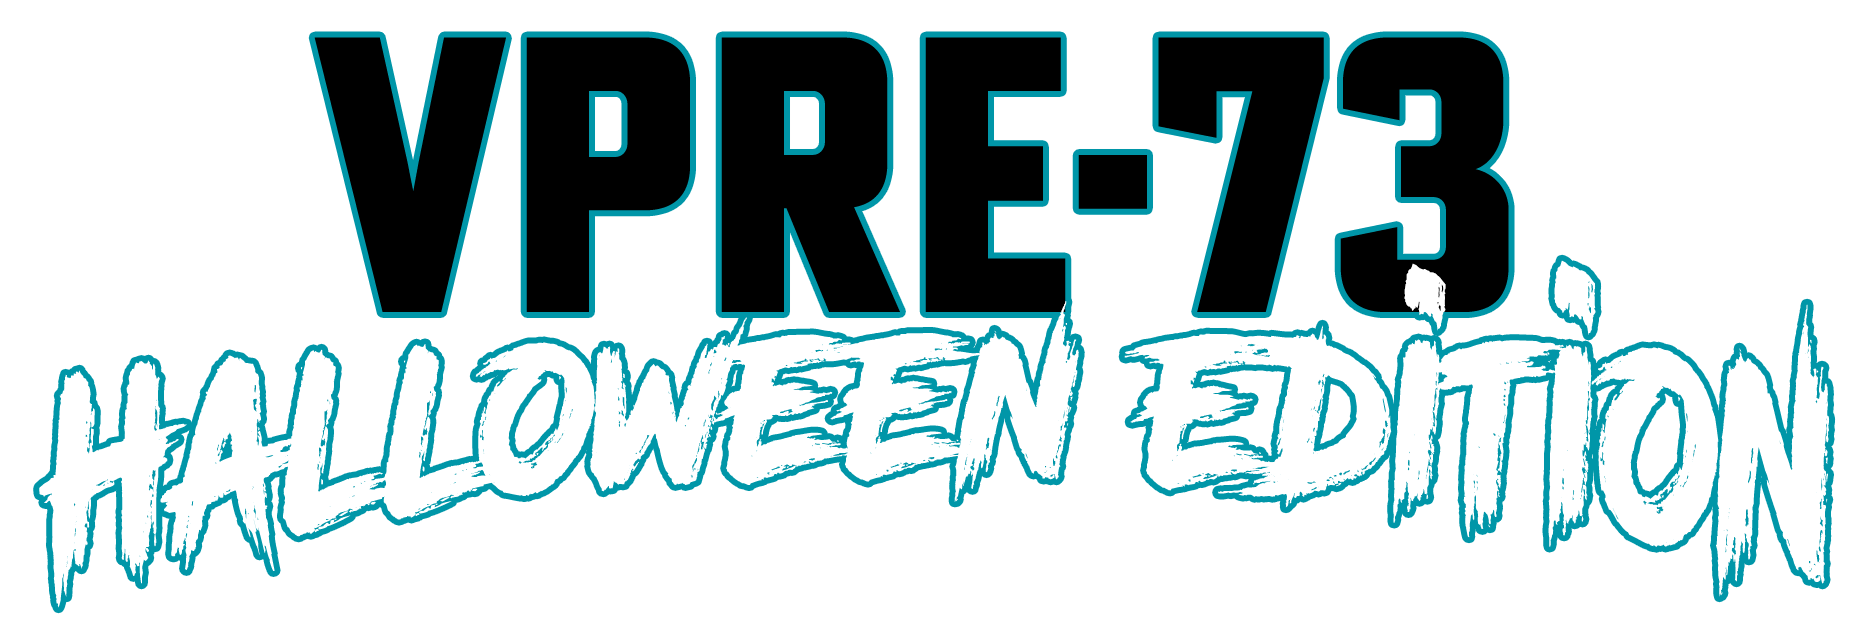 vpre-73-halloween-edition Logo